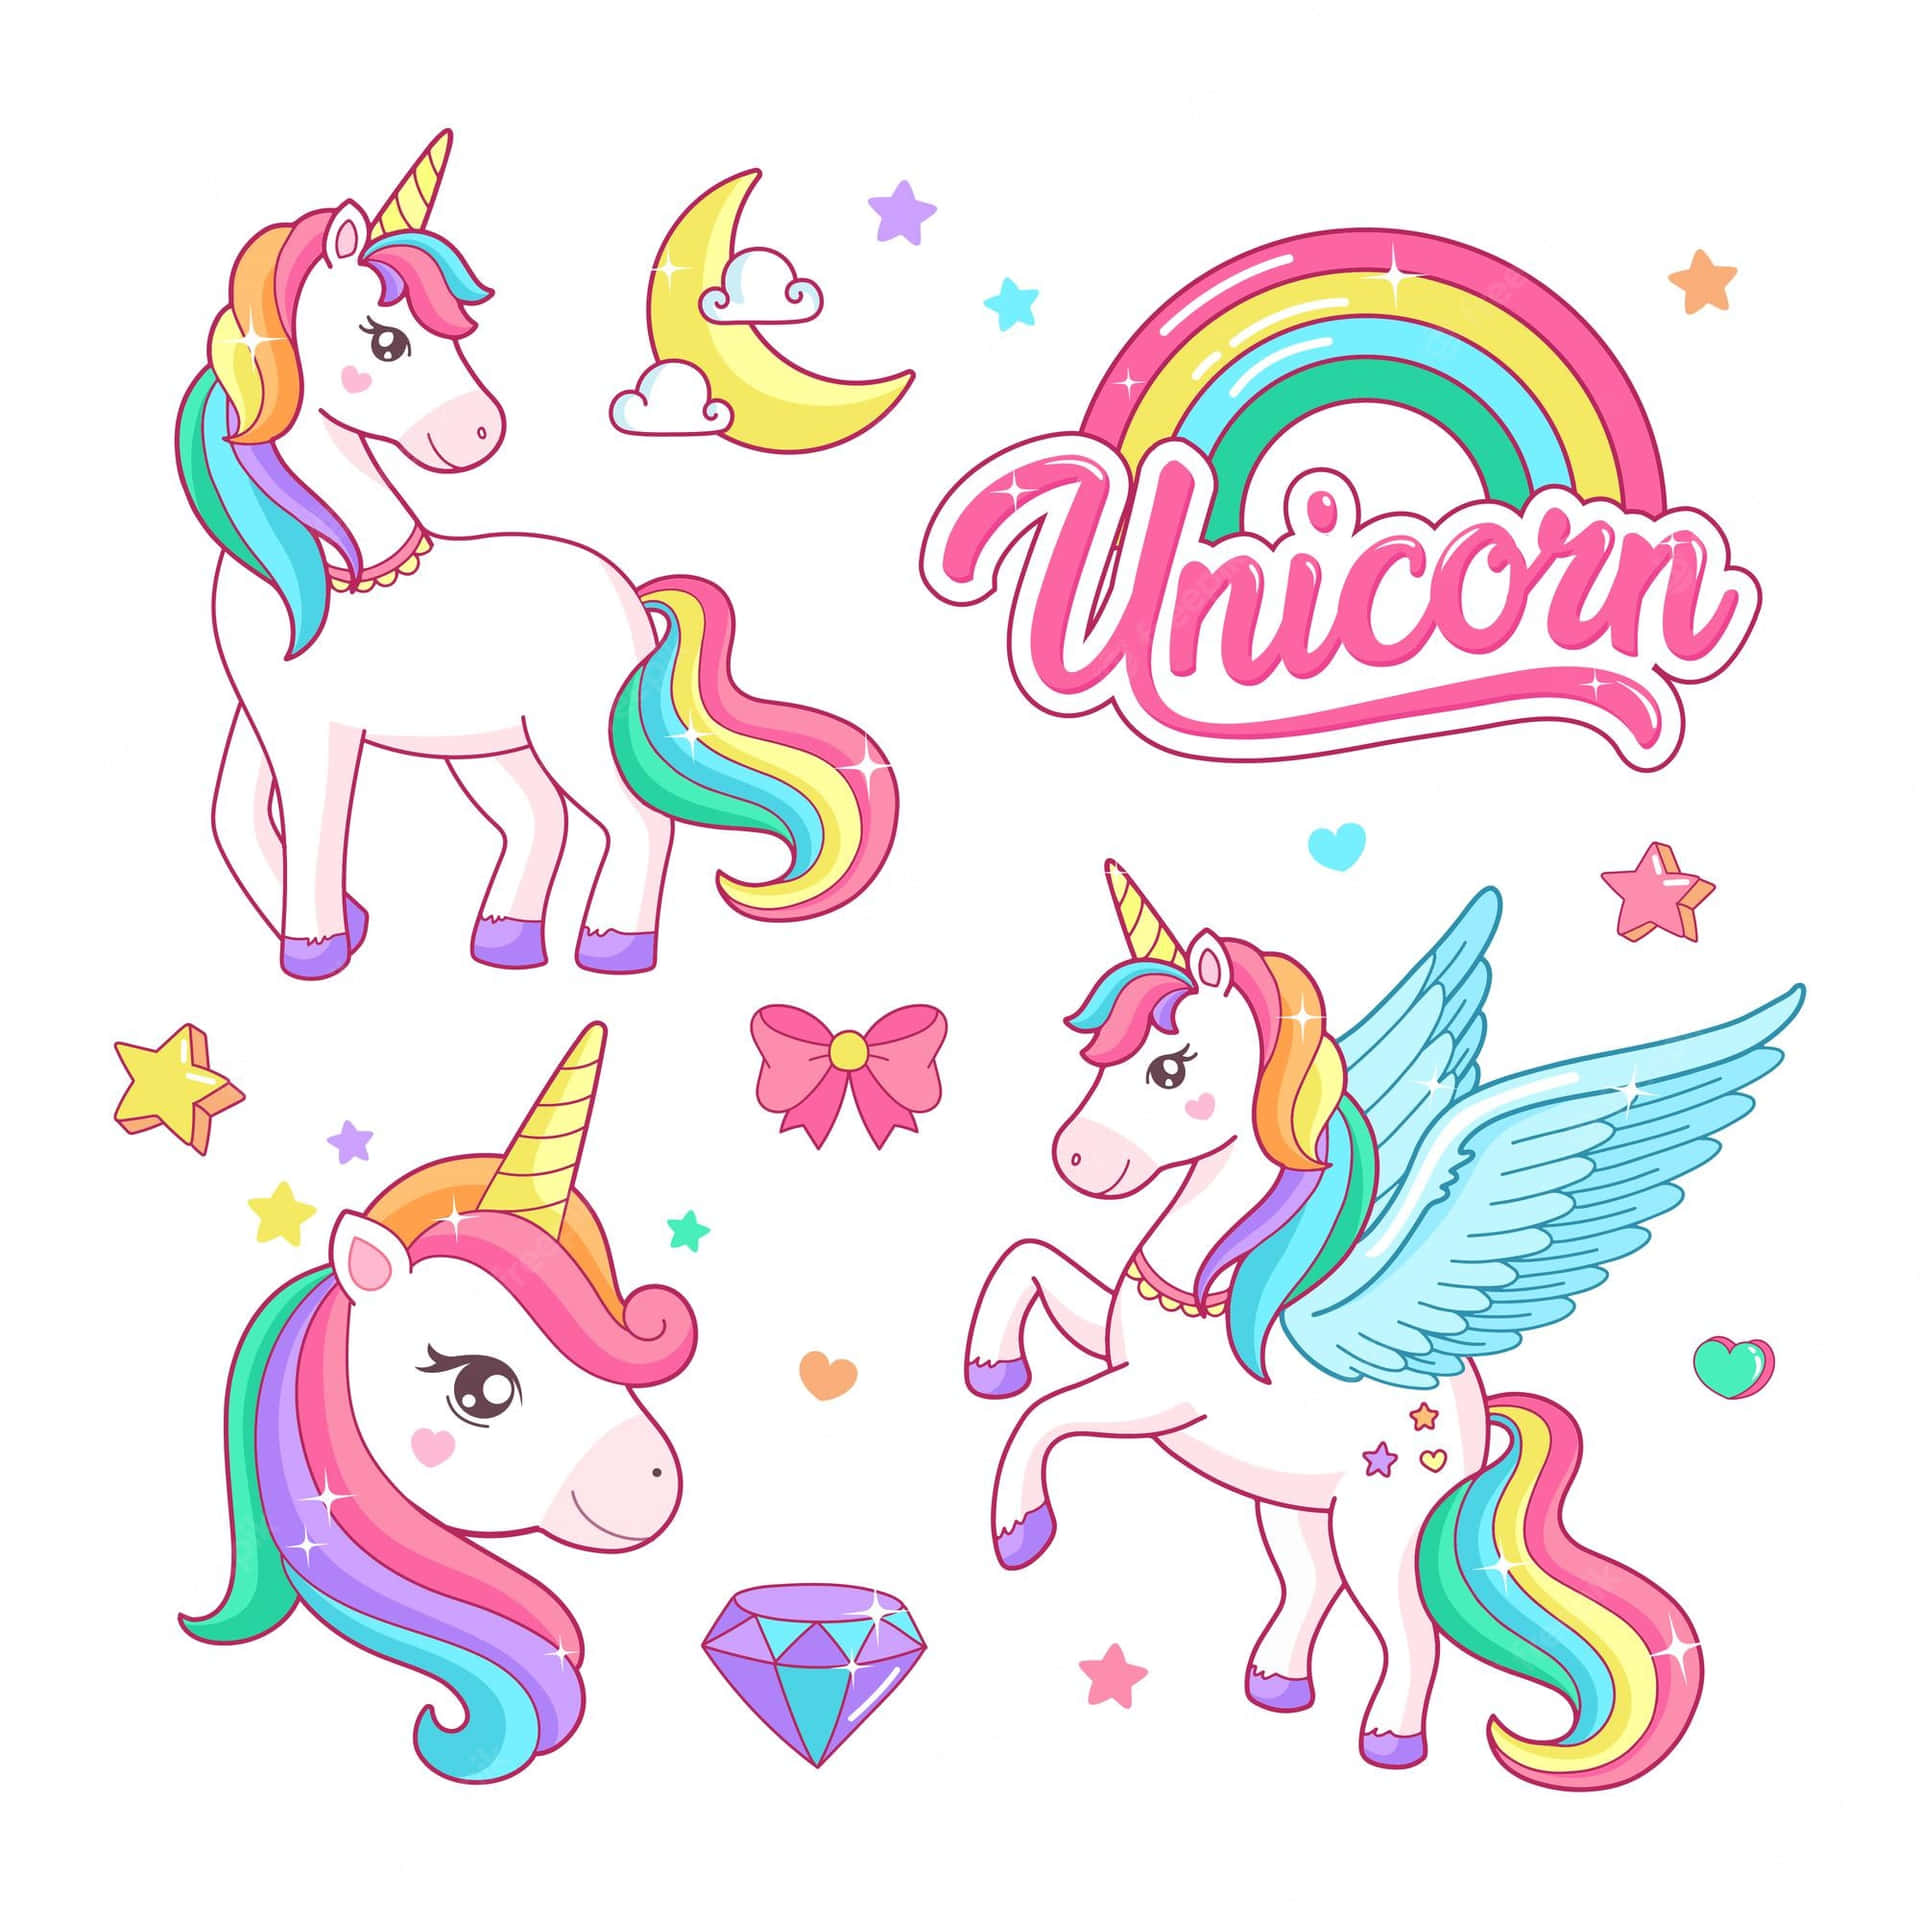 Unicorn Vector Art Pictures